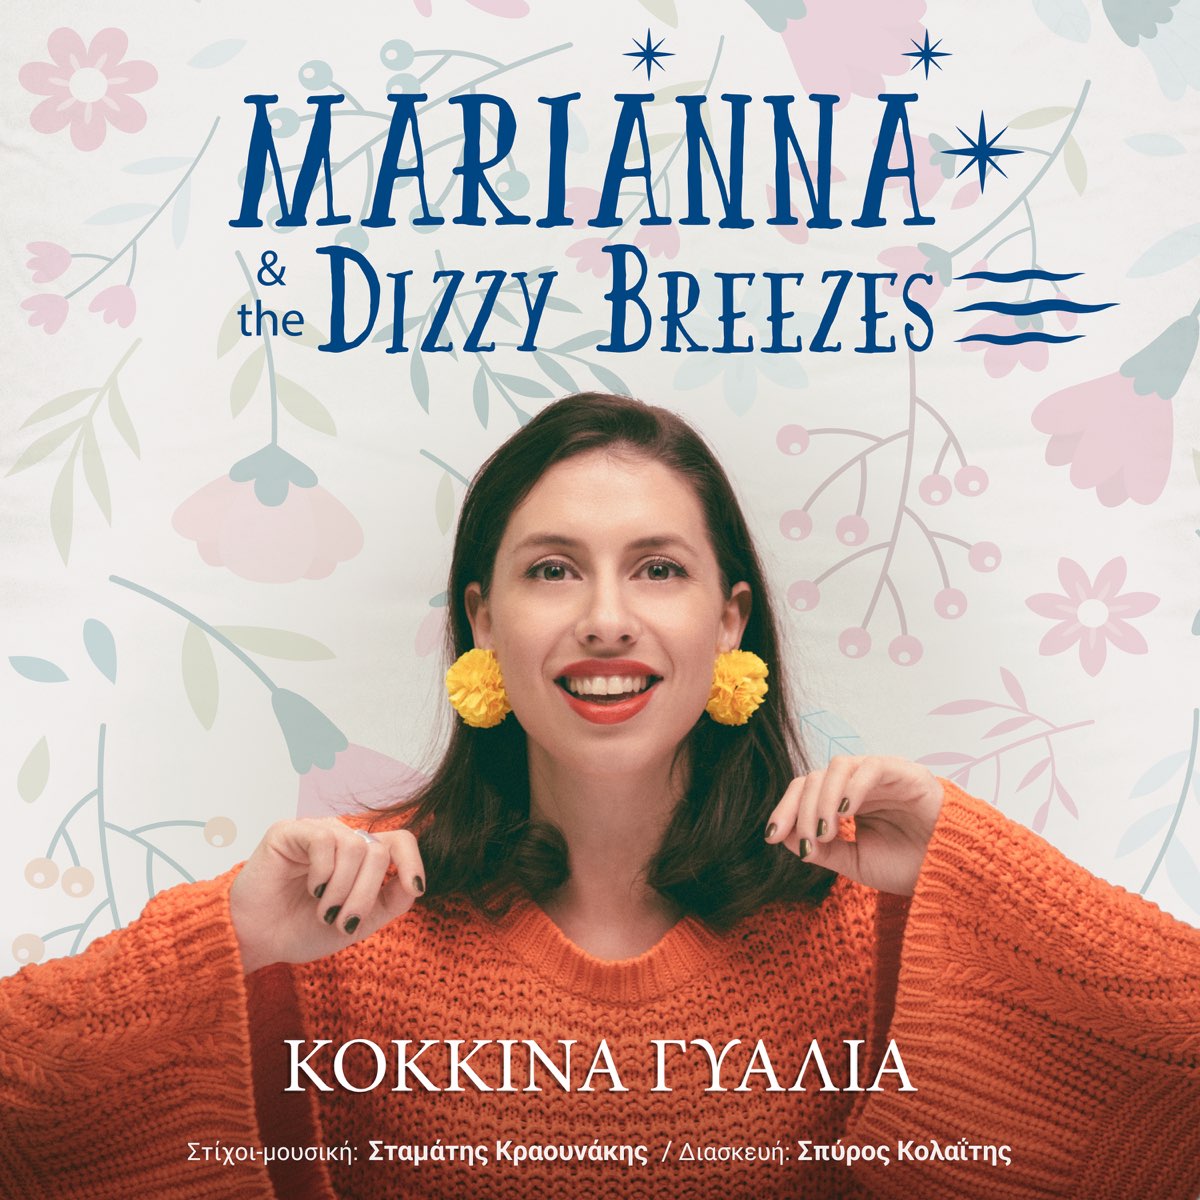 Kokkina Gialia - Single by Marianna Papathanasiou & the Dizzy Breezes on  Apple Music